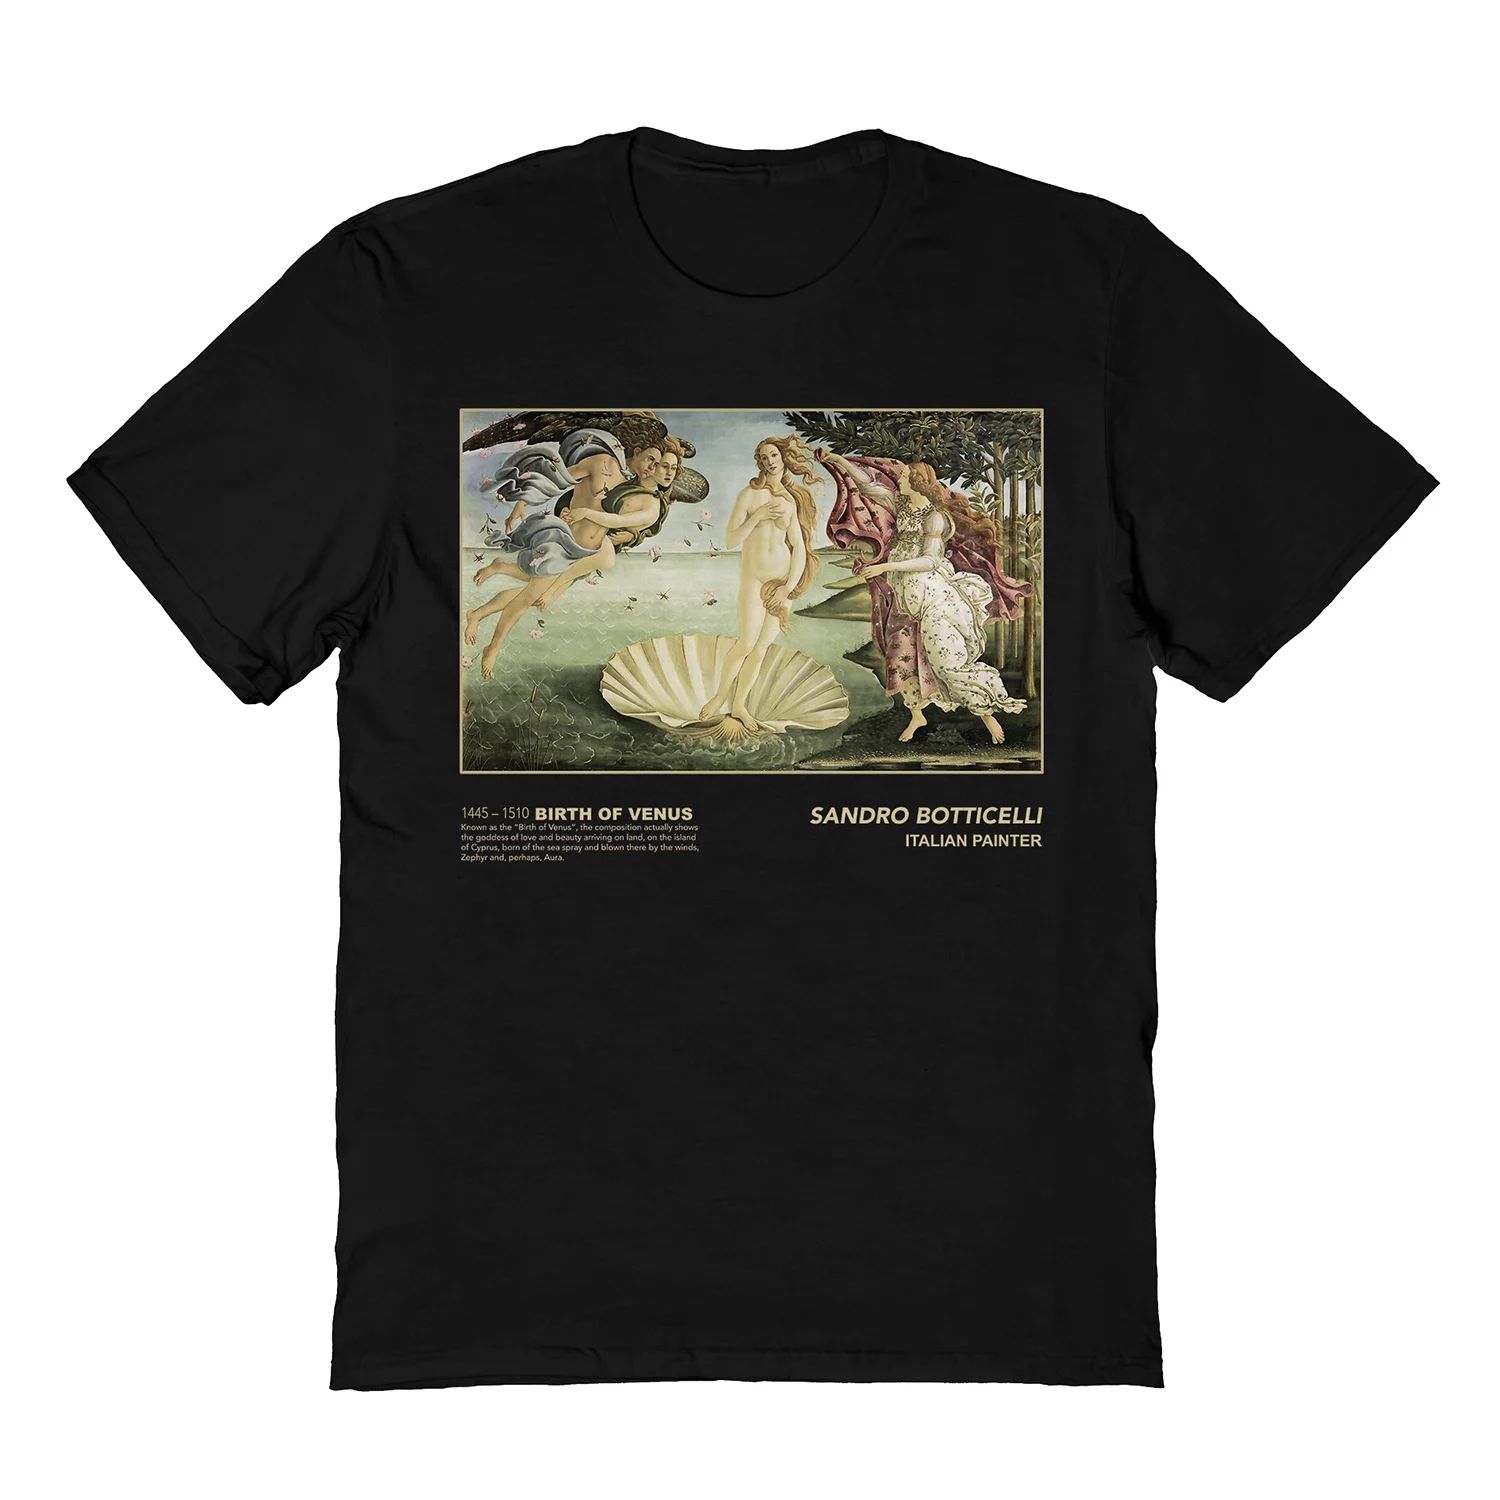 Мужская футболка Sandro Botticelli рождение Венеры черная Licensed Character deimling barbara sandro botticelli